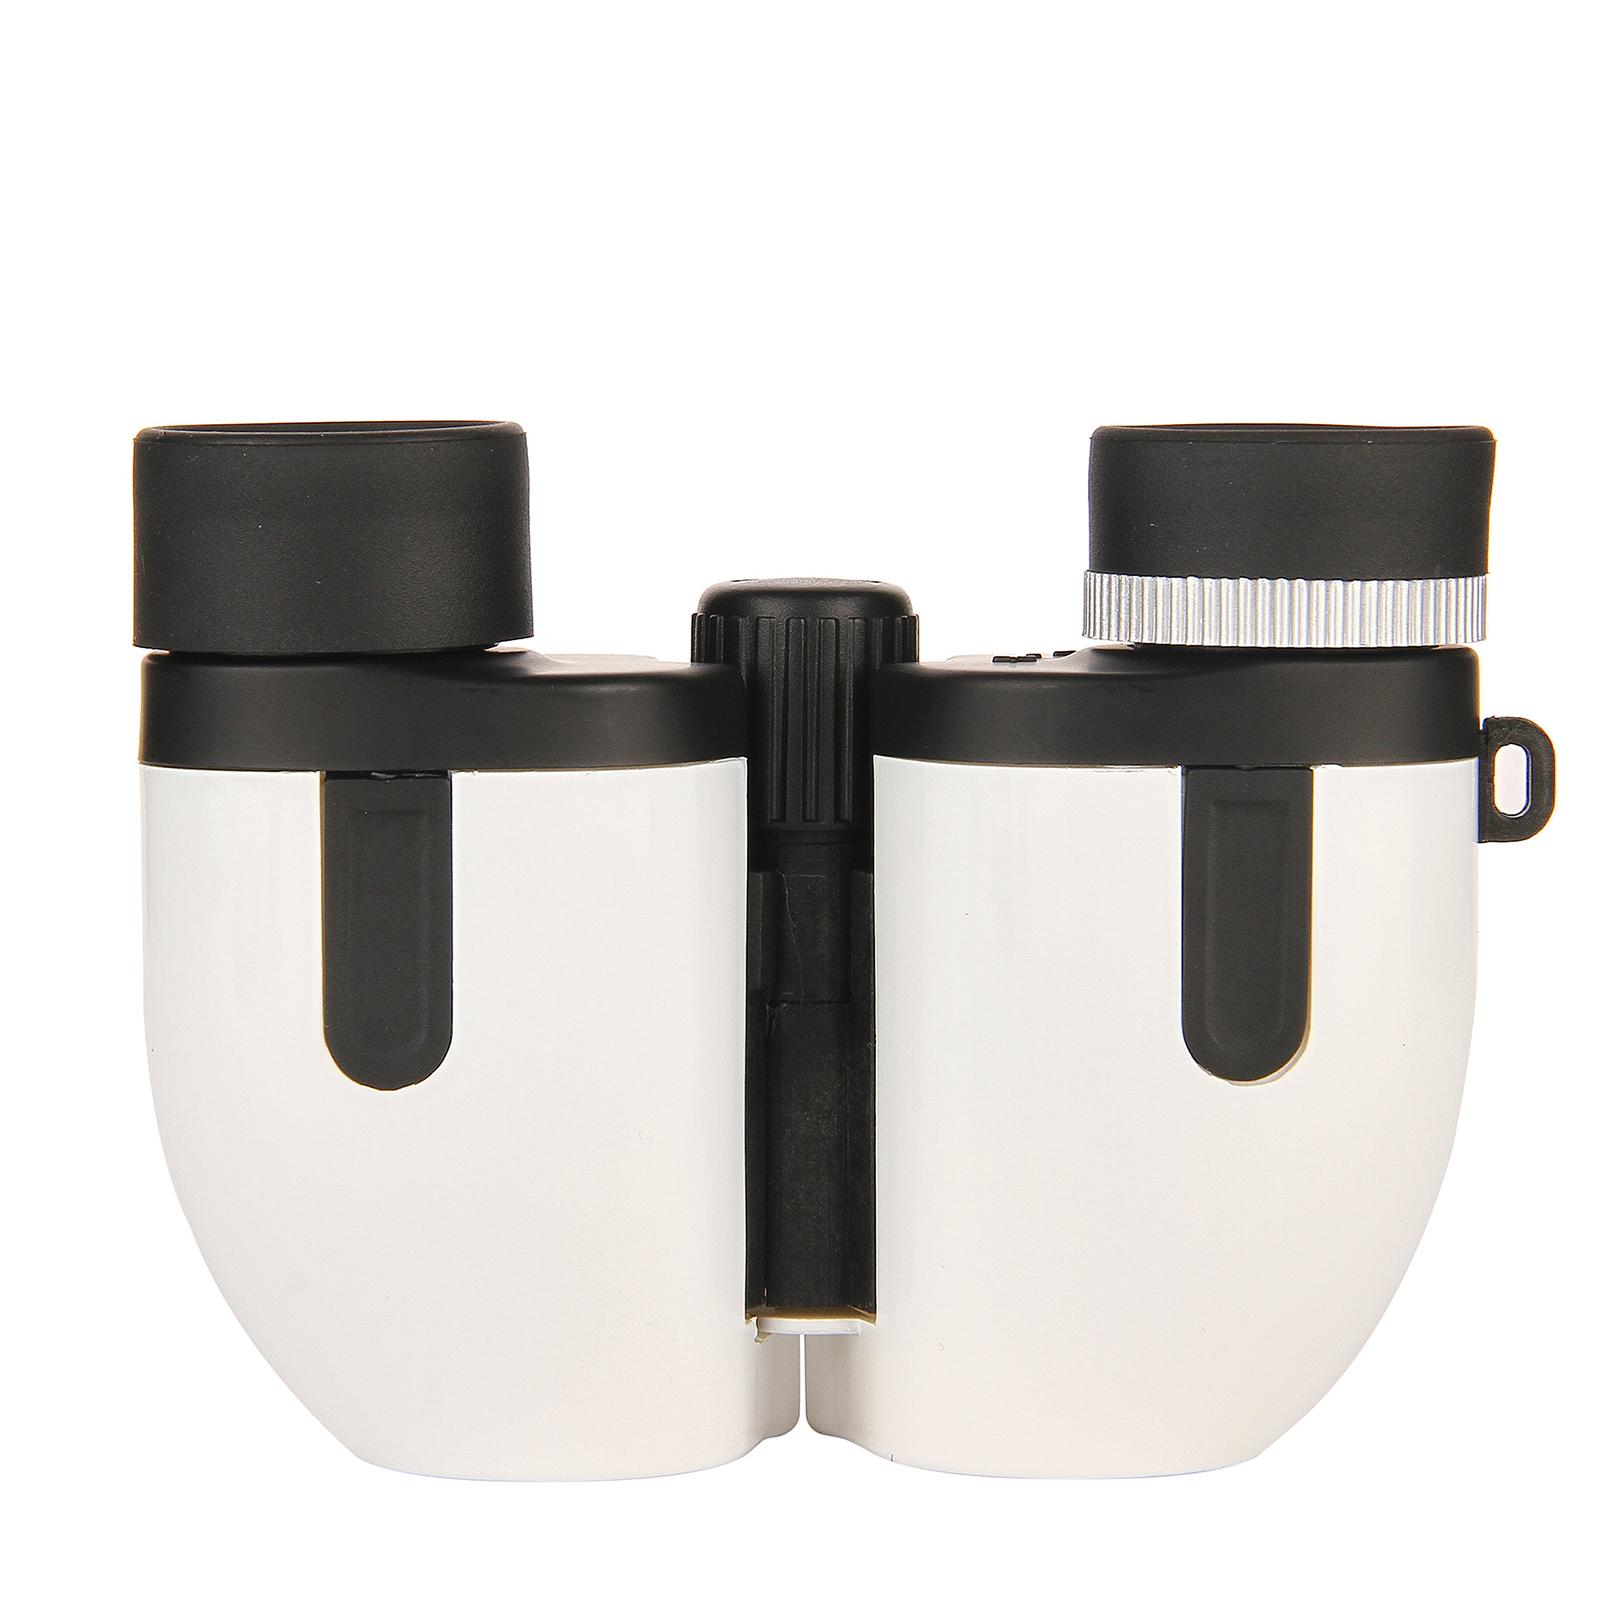 Binoculars Compact Lightweight Small for Bird Watching Outdoor White